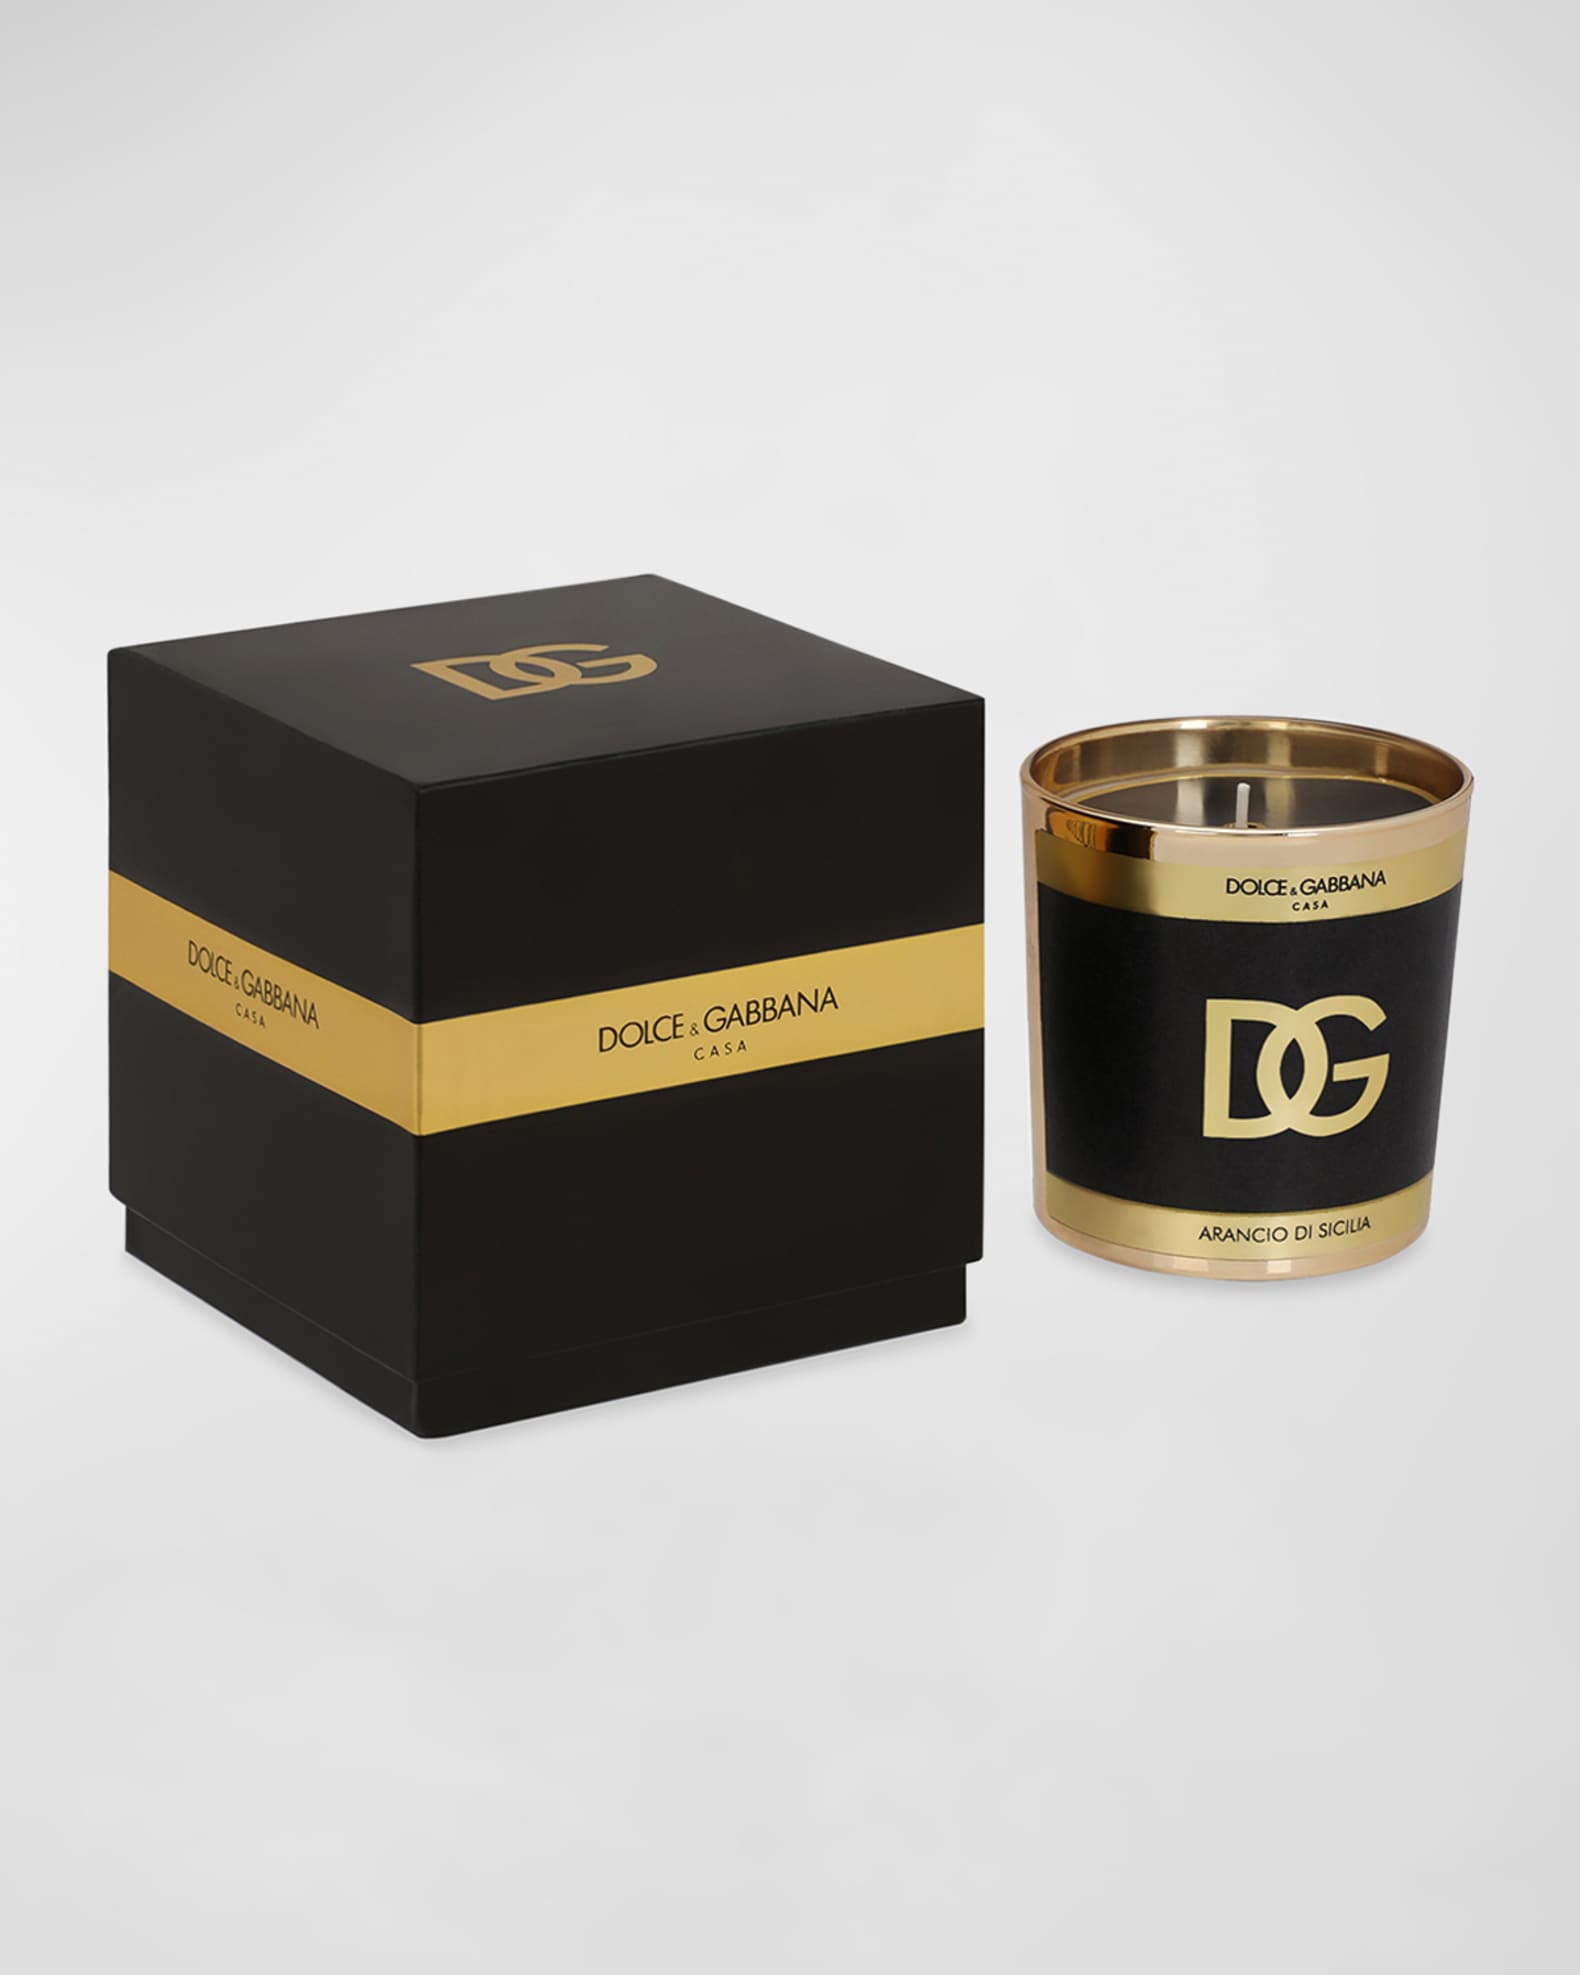 Dolce&Gabbana Casa Leopard Scented Candle, 8.8 oz.